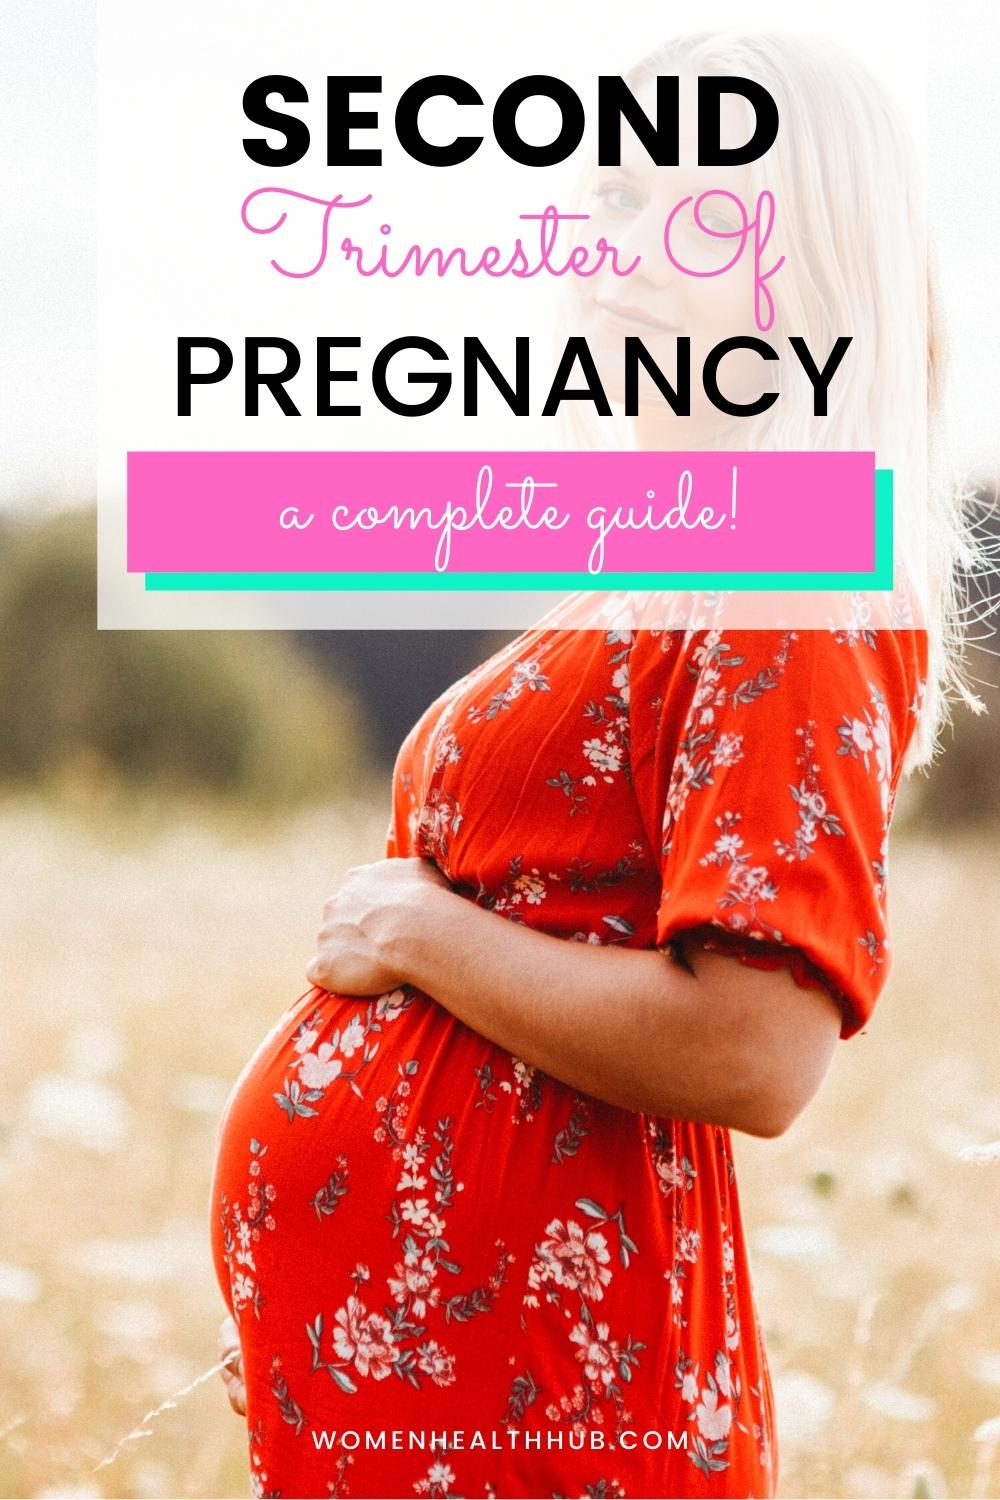 2nd trimester of pregnancy - Women Health Hub